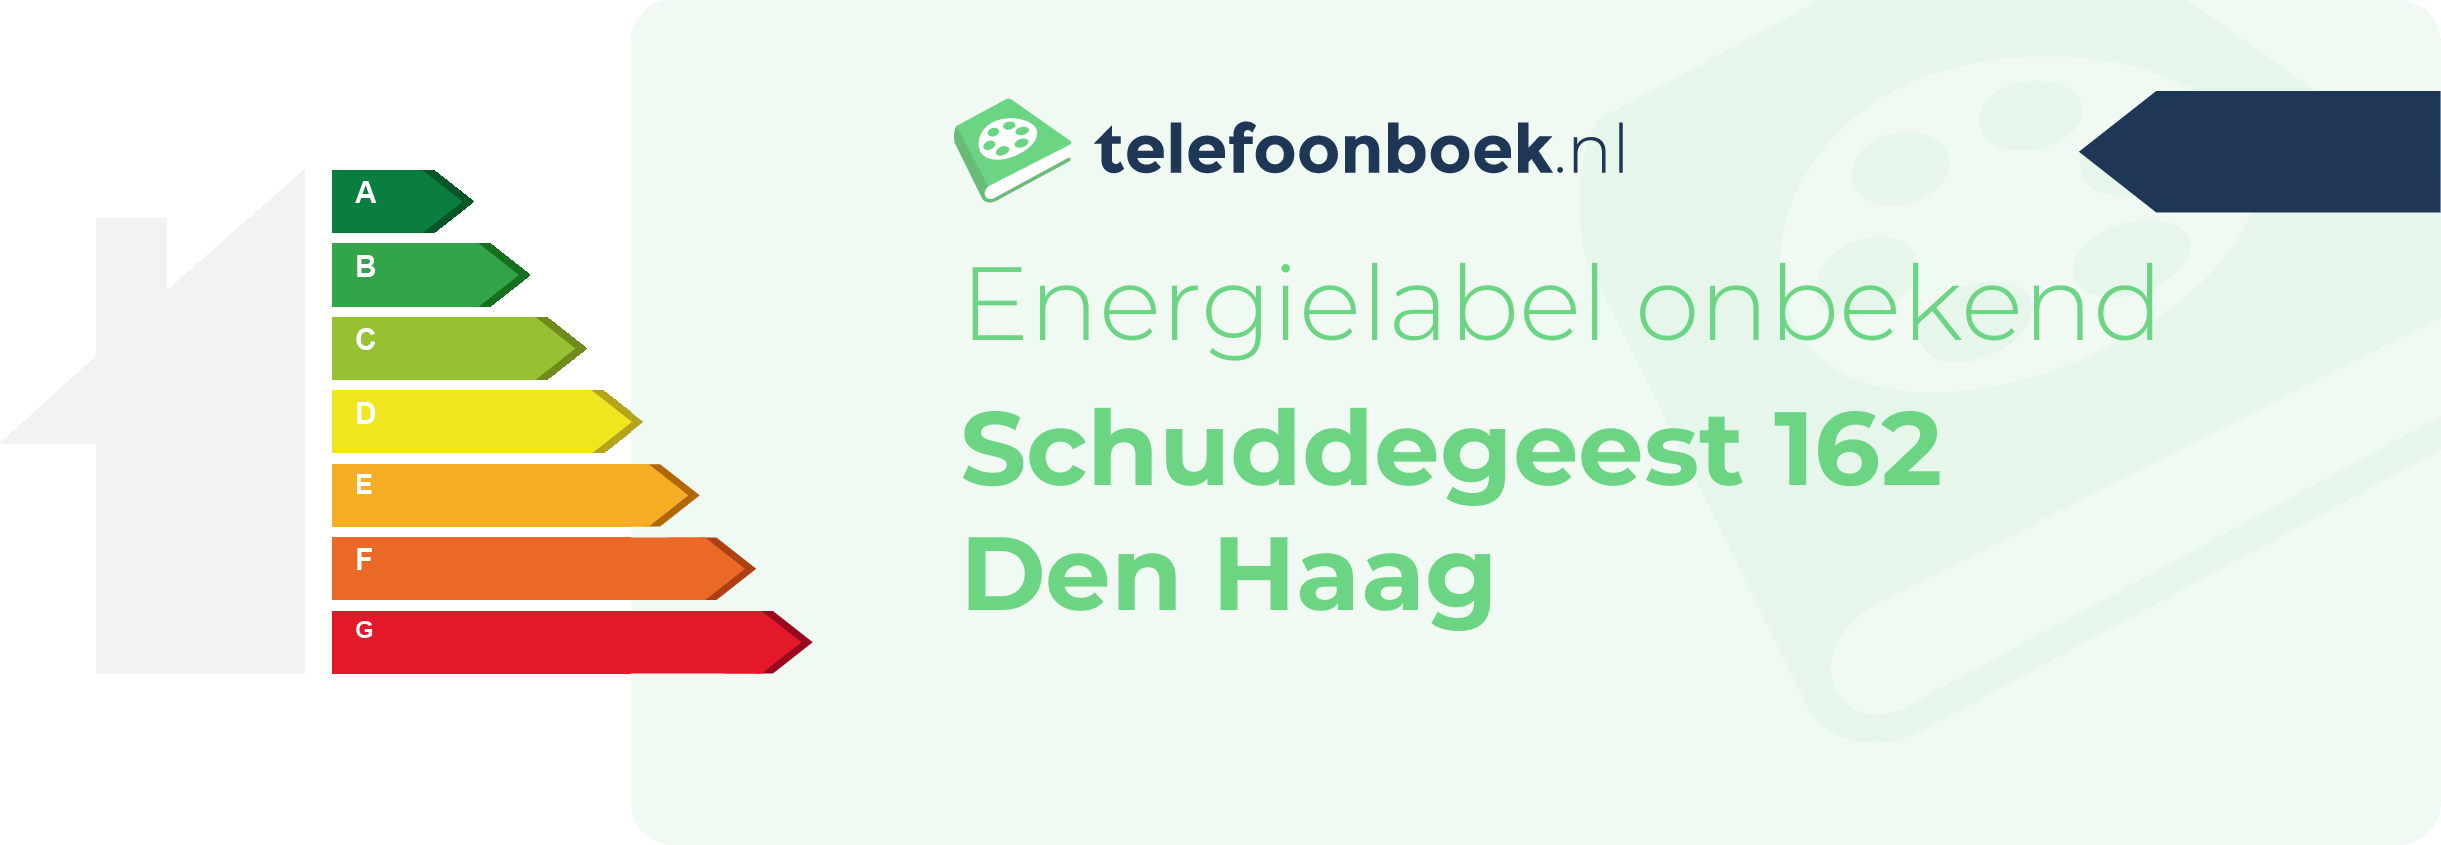 Energielabel Schuddegeest 162 Den Haag